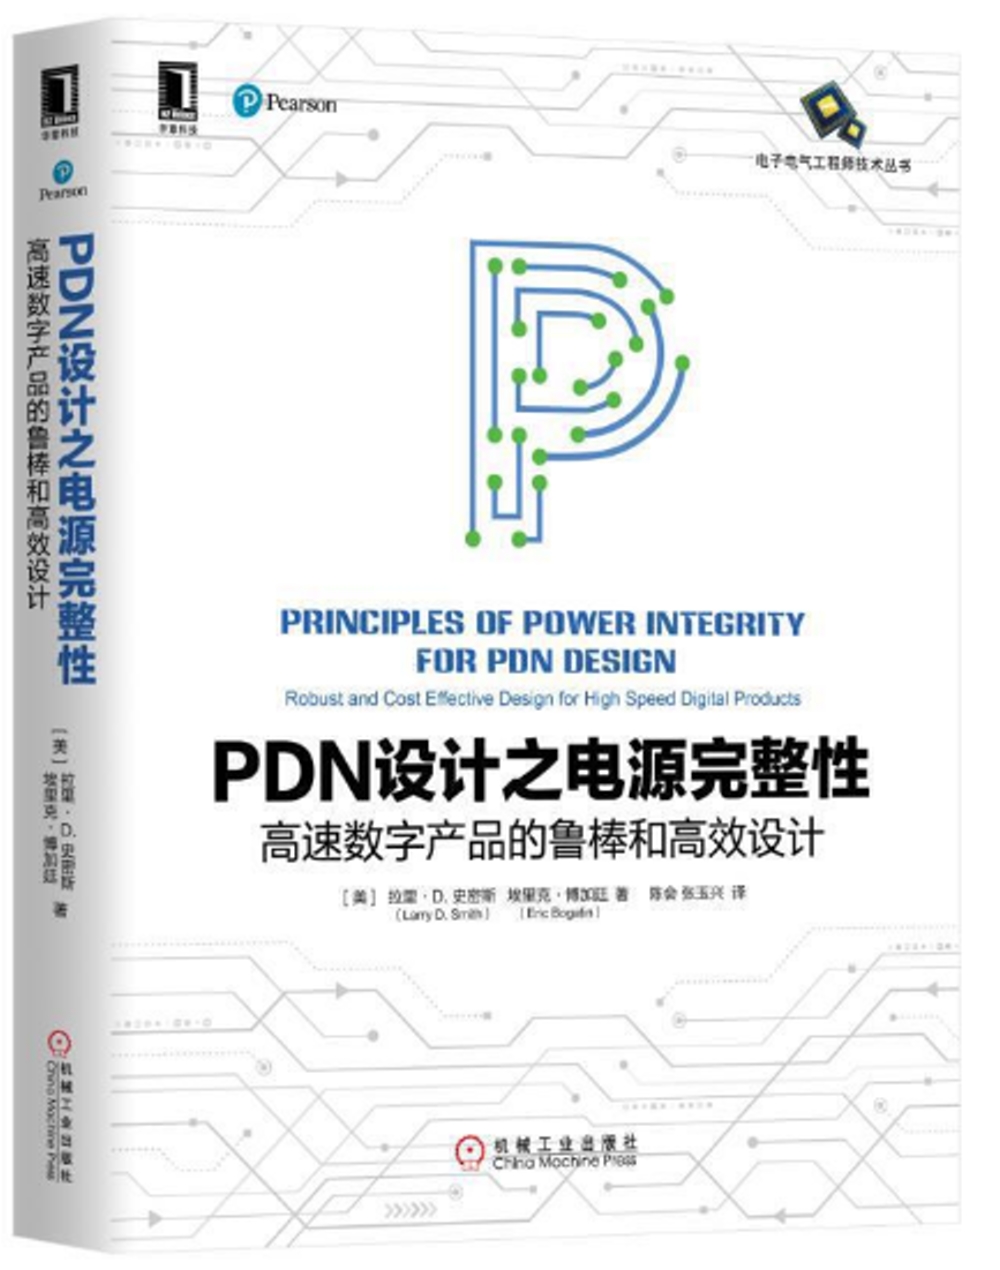 PDN設計之電源完整性：高速數字產品的魯棒和高效設計